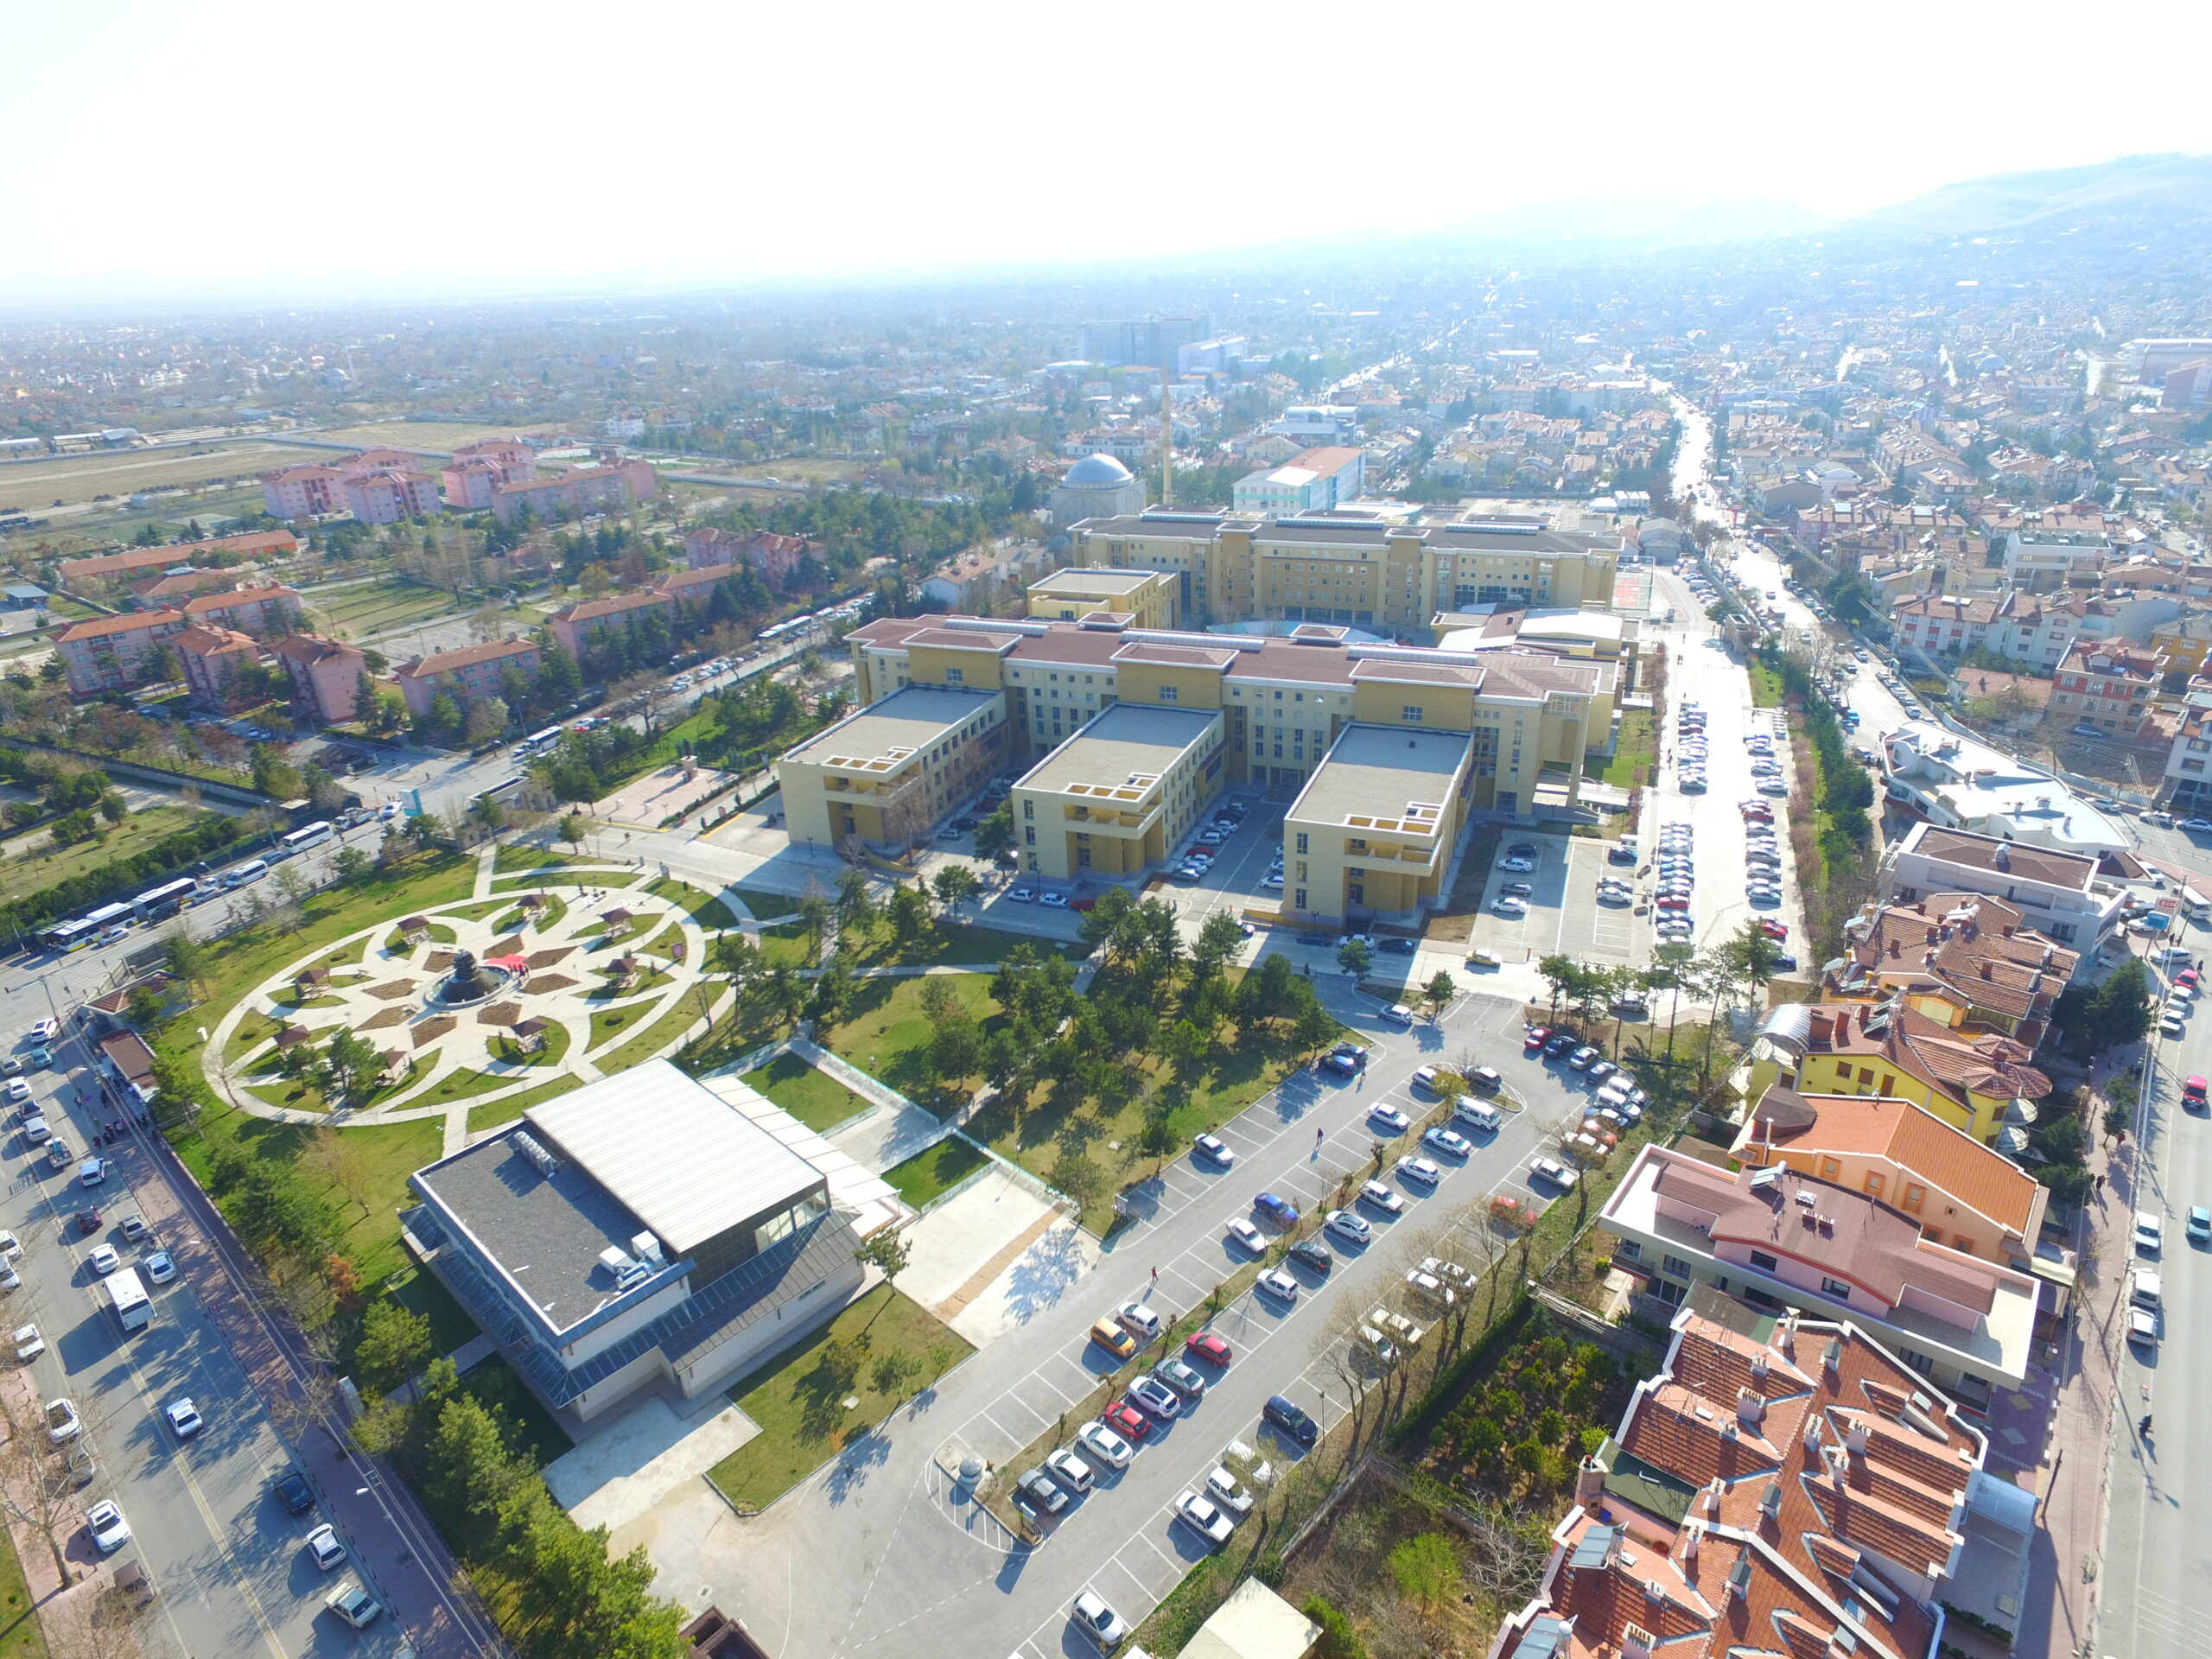 necmettinerbakan universitesi find and study 1 scaled - Necmettin Erbakan University